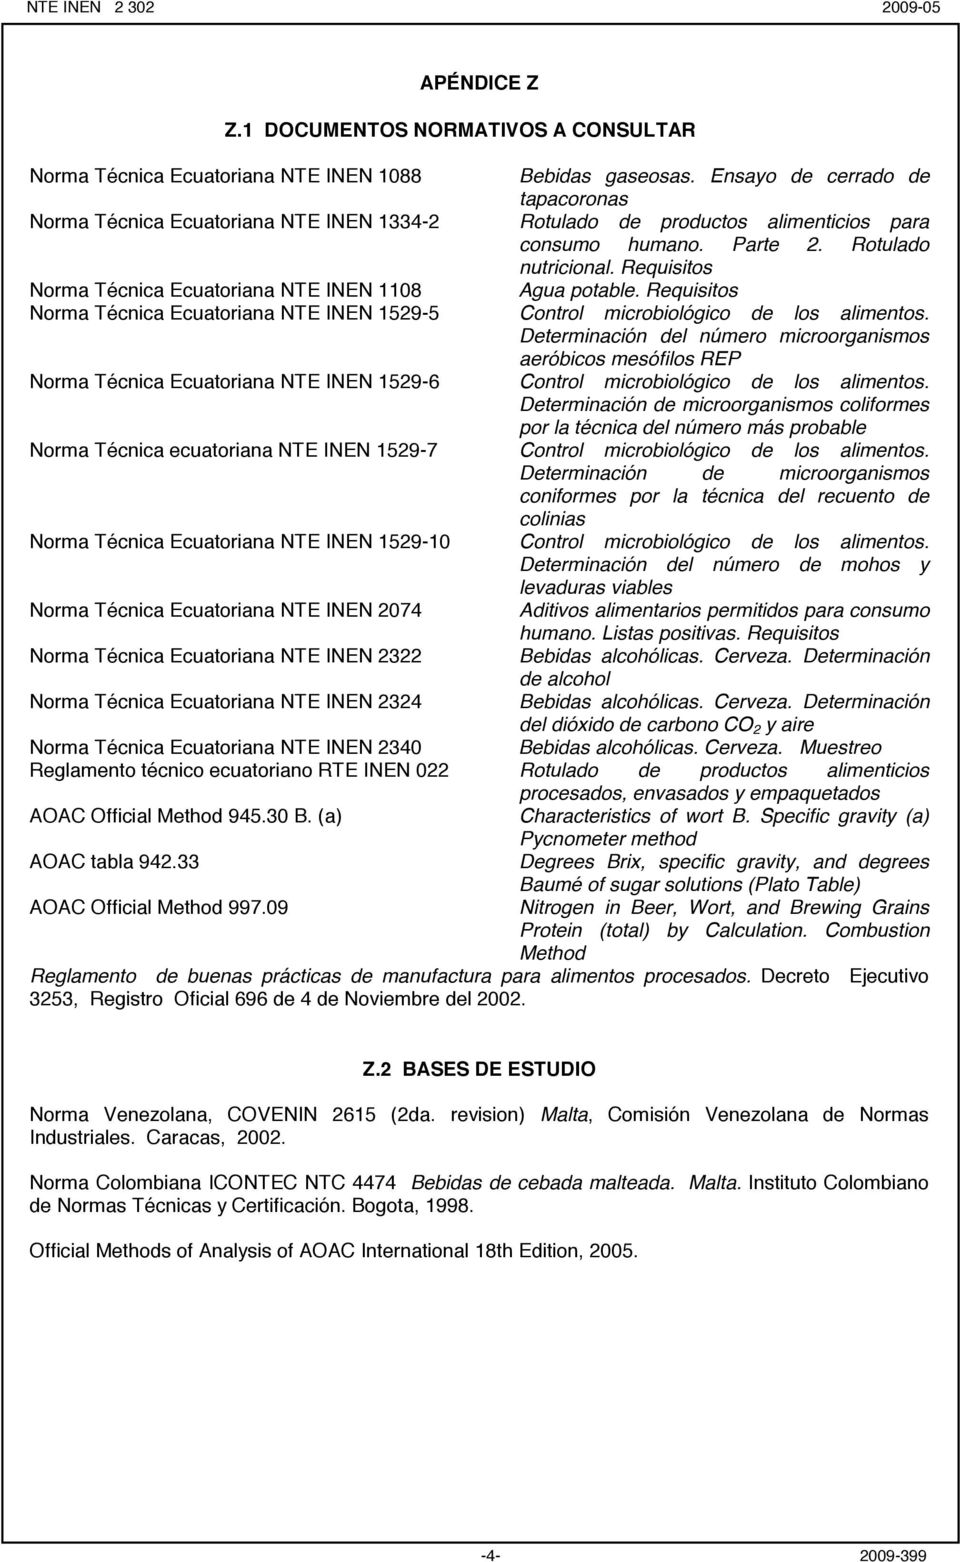 Requisitos Norma Técnica Ecuatoriana NTE INEN 1108 Agua potable. Requisitos Norma Técnica Ecuatoriana NTE INEN 1529-5 Control microbiológico de los alimentos.